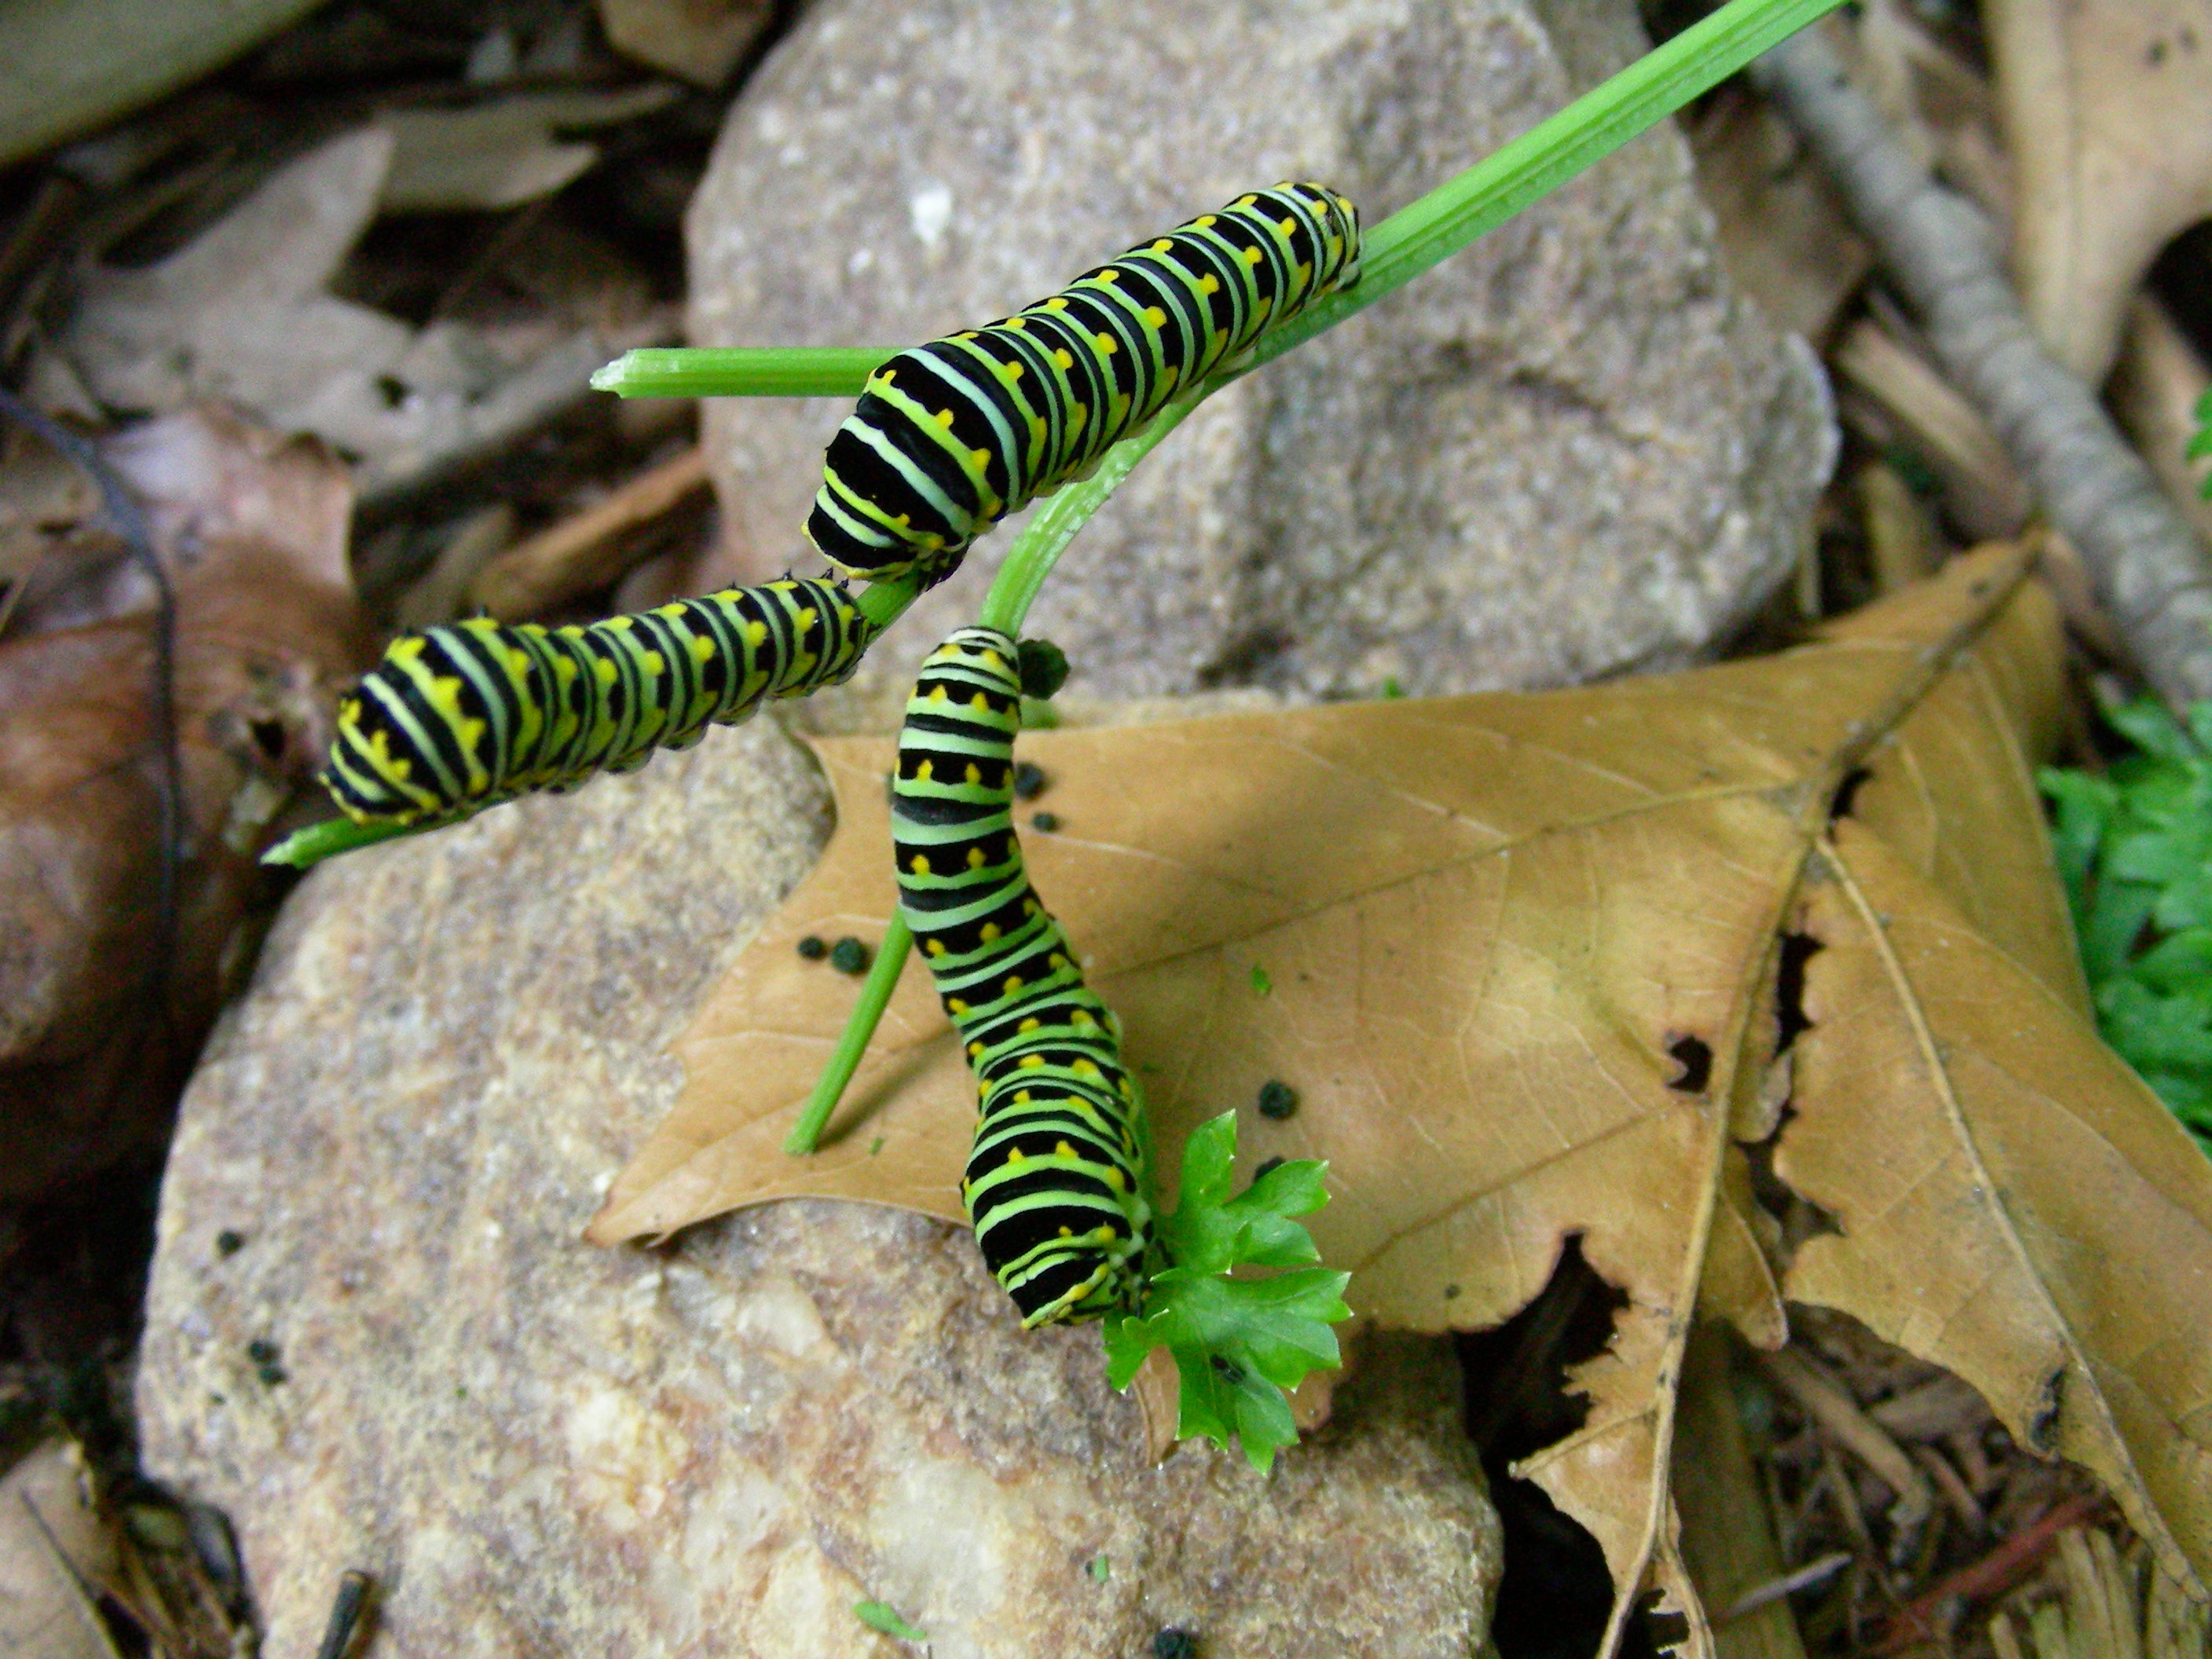 Black swallowtail caterpillars eating dill plant